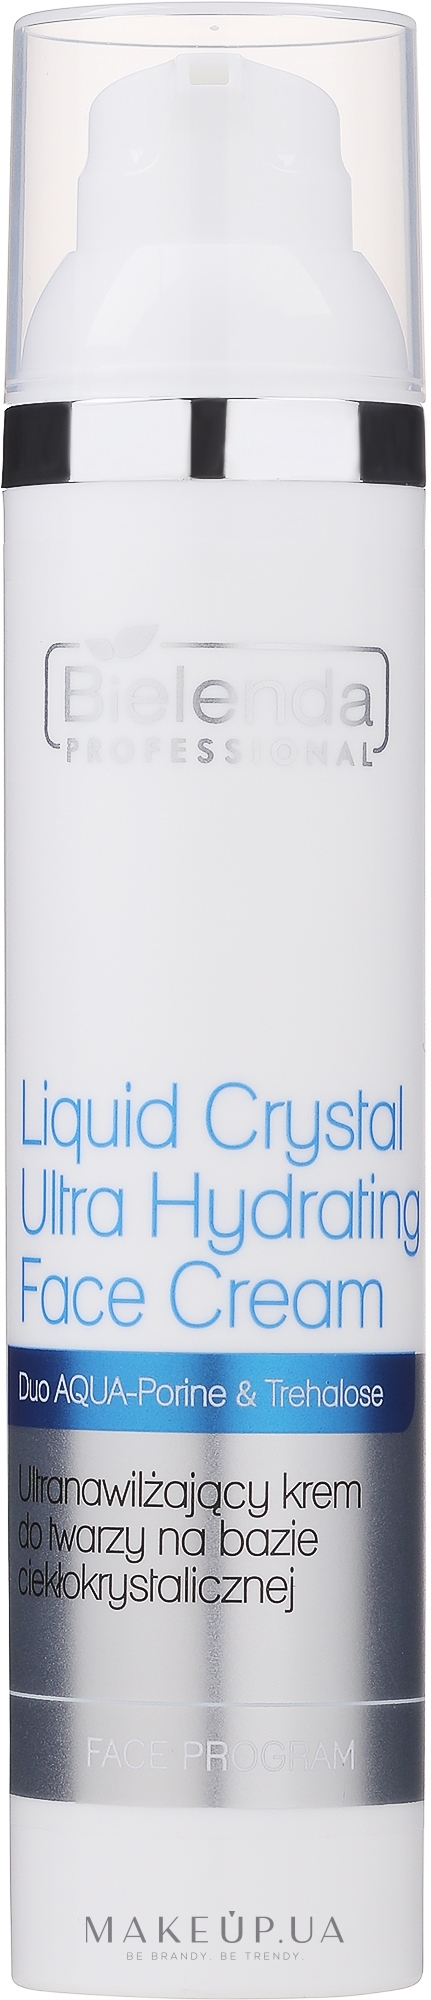 Ультразволожувальний крем для обличчя, рідкокристалічна основа, SPF 15  - Bielenda Professional Face Program Liquid Crystal Ultra Hydrating Face Cream — фото 100ml